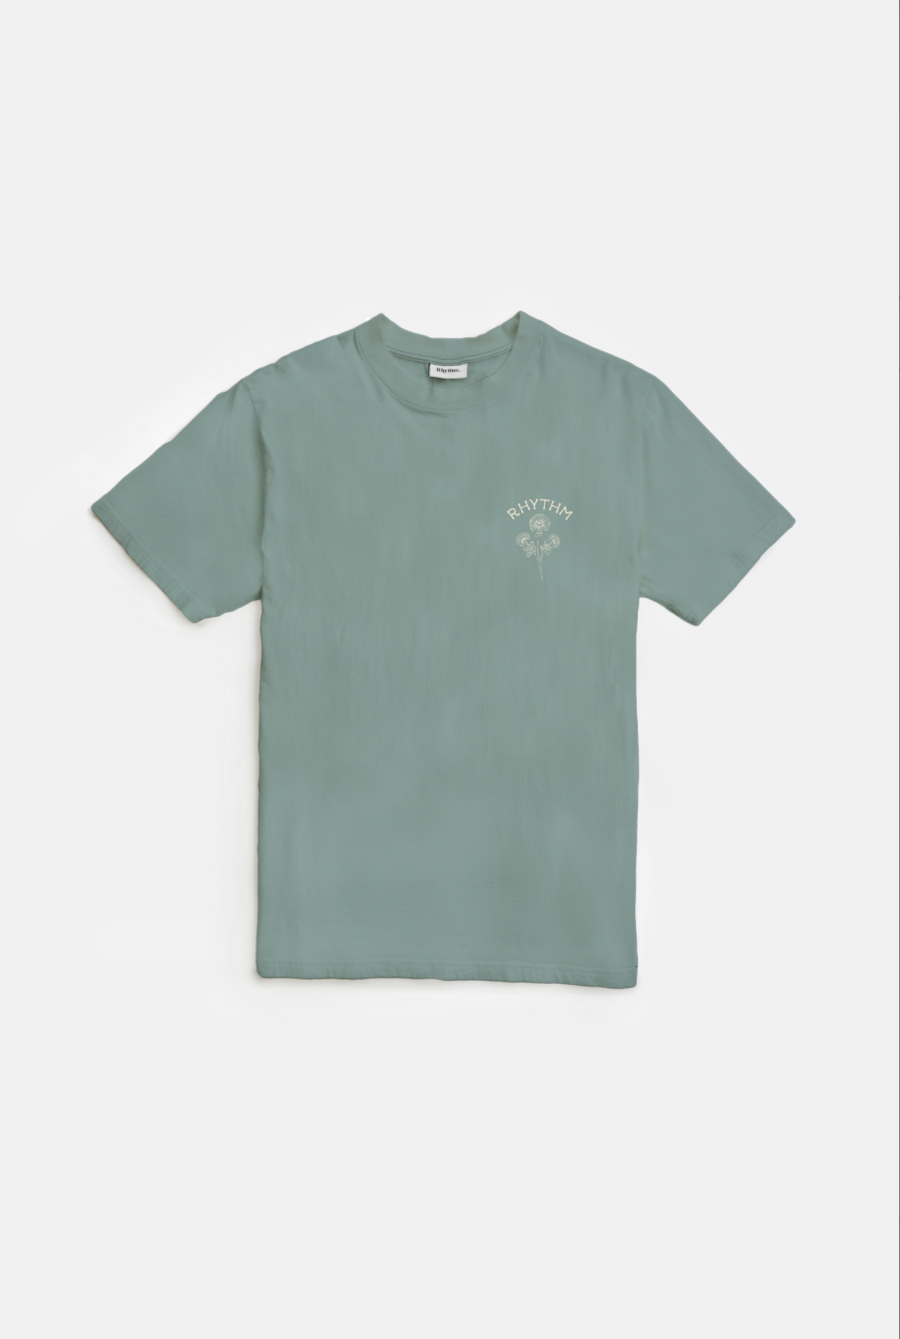 Rhythm Wish SS T-Shirt Seafoam | Collective Request 